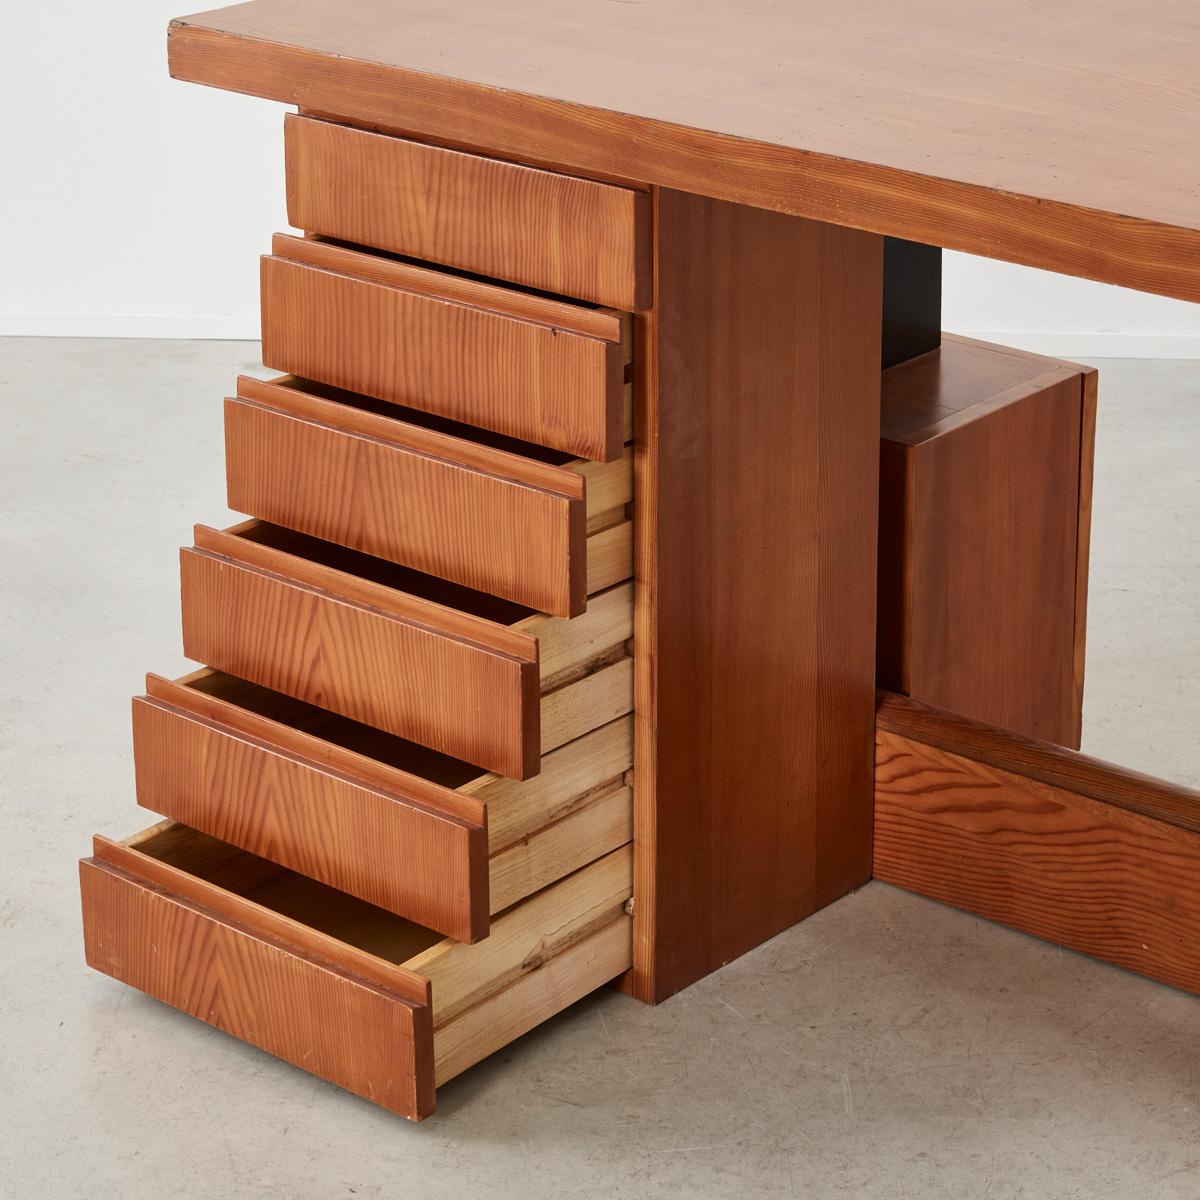 Wood Unique Constructivist style desk by Daniele Baroni, Italy, c1960